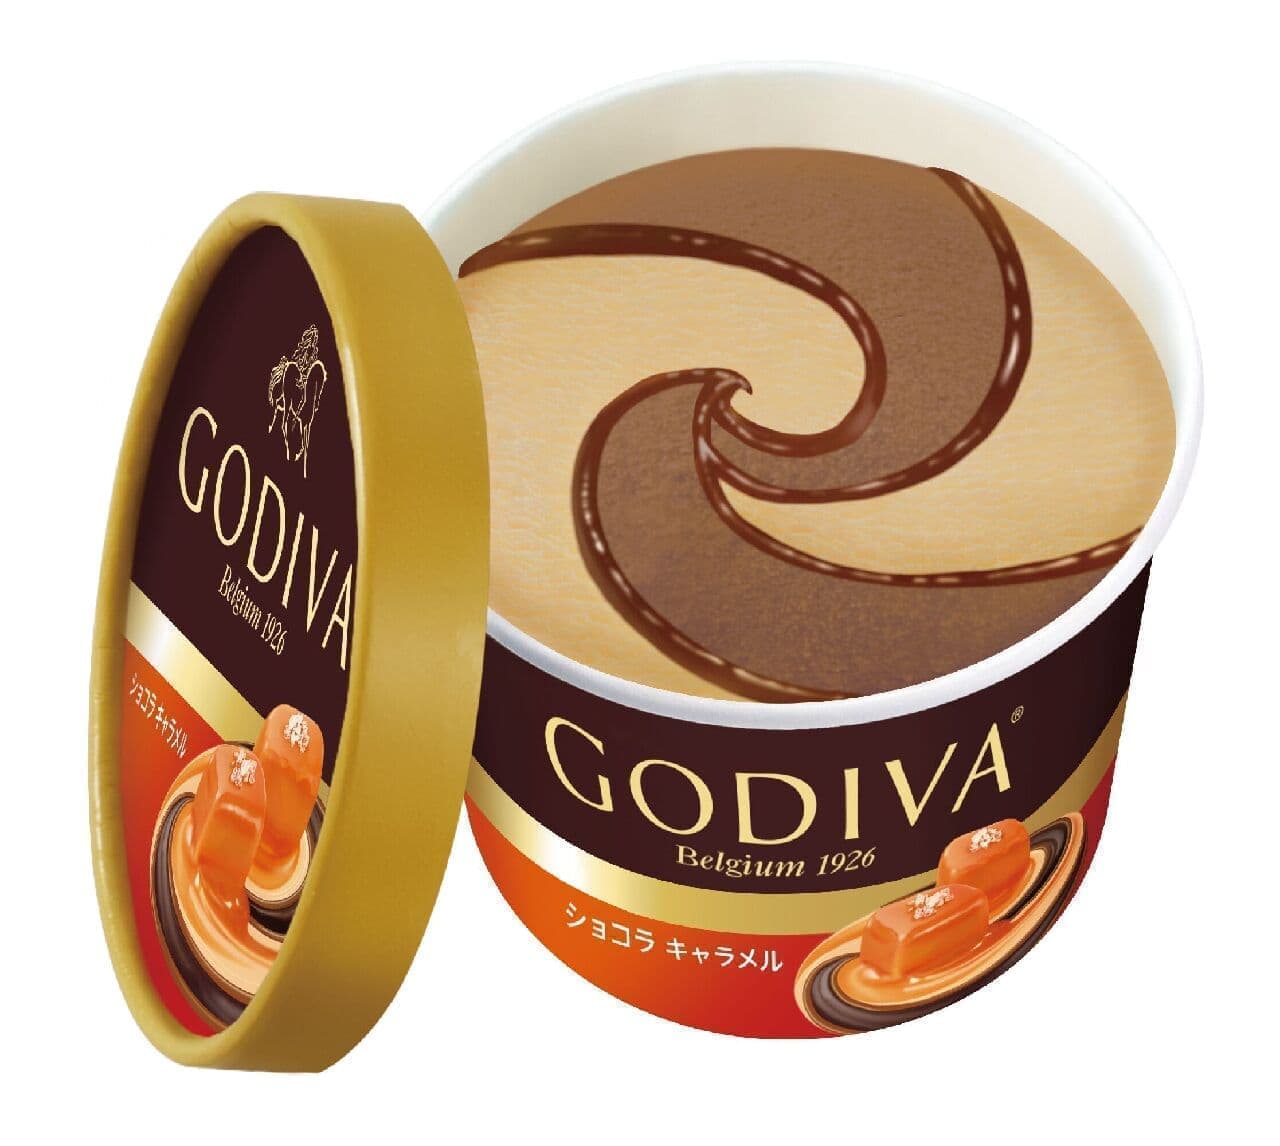 Godiva Cup Ice "Chocolat Caramel"